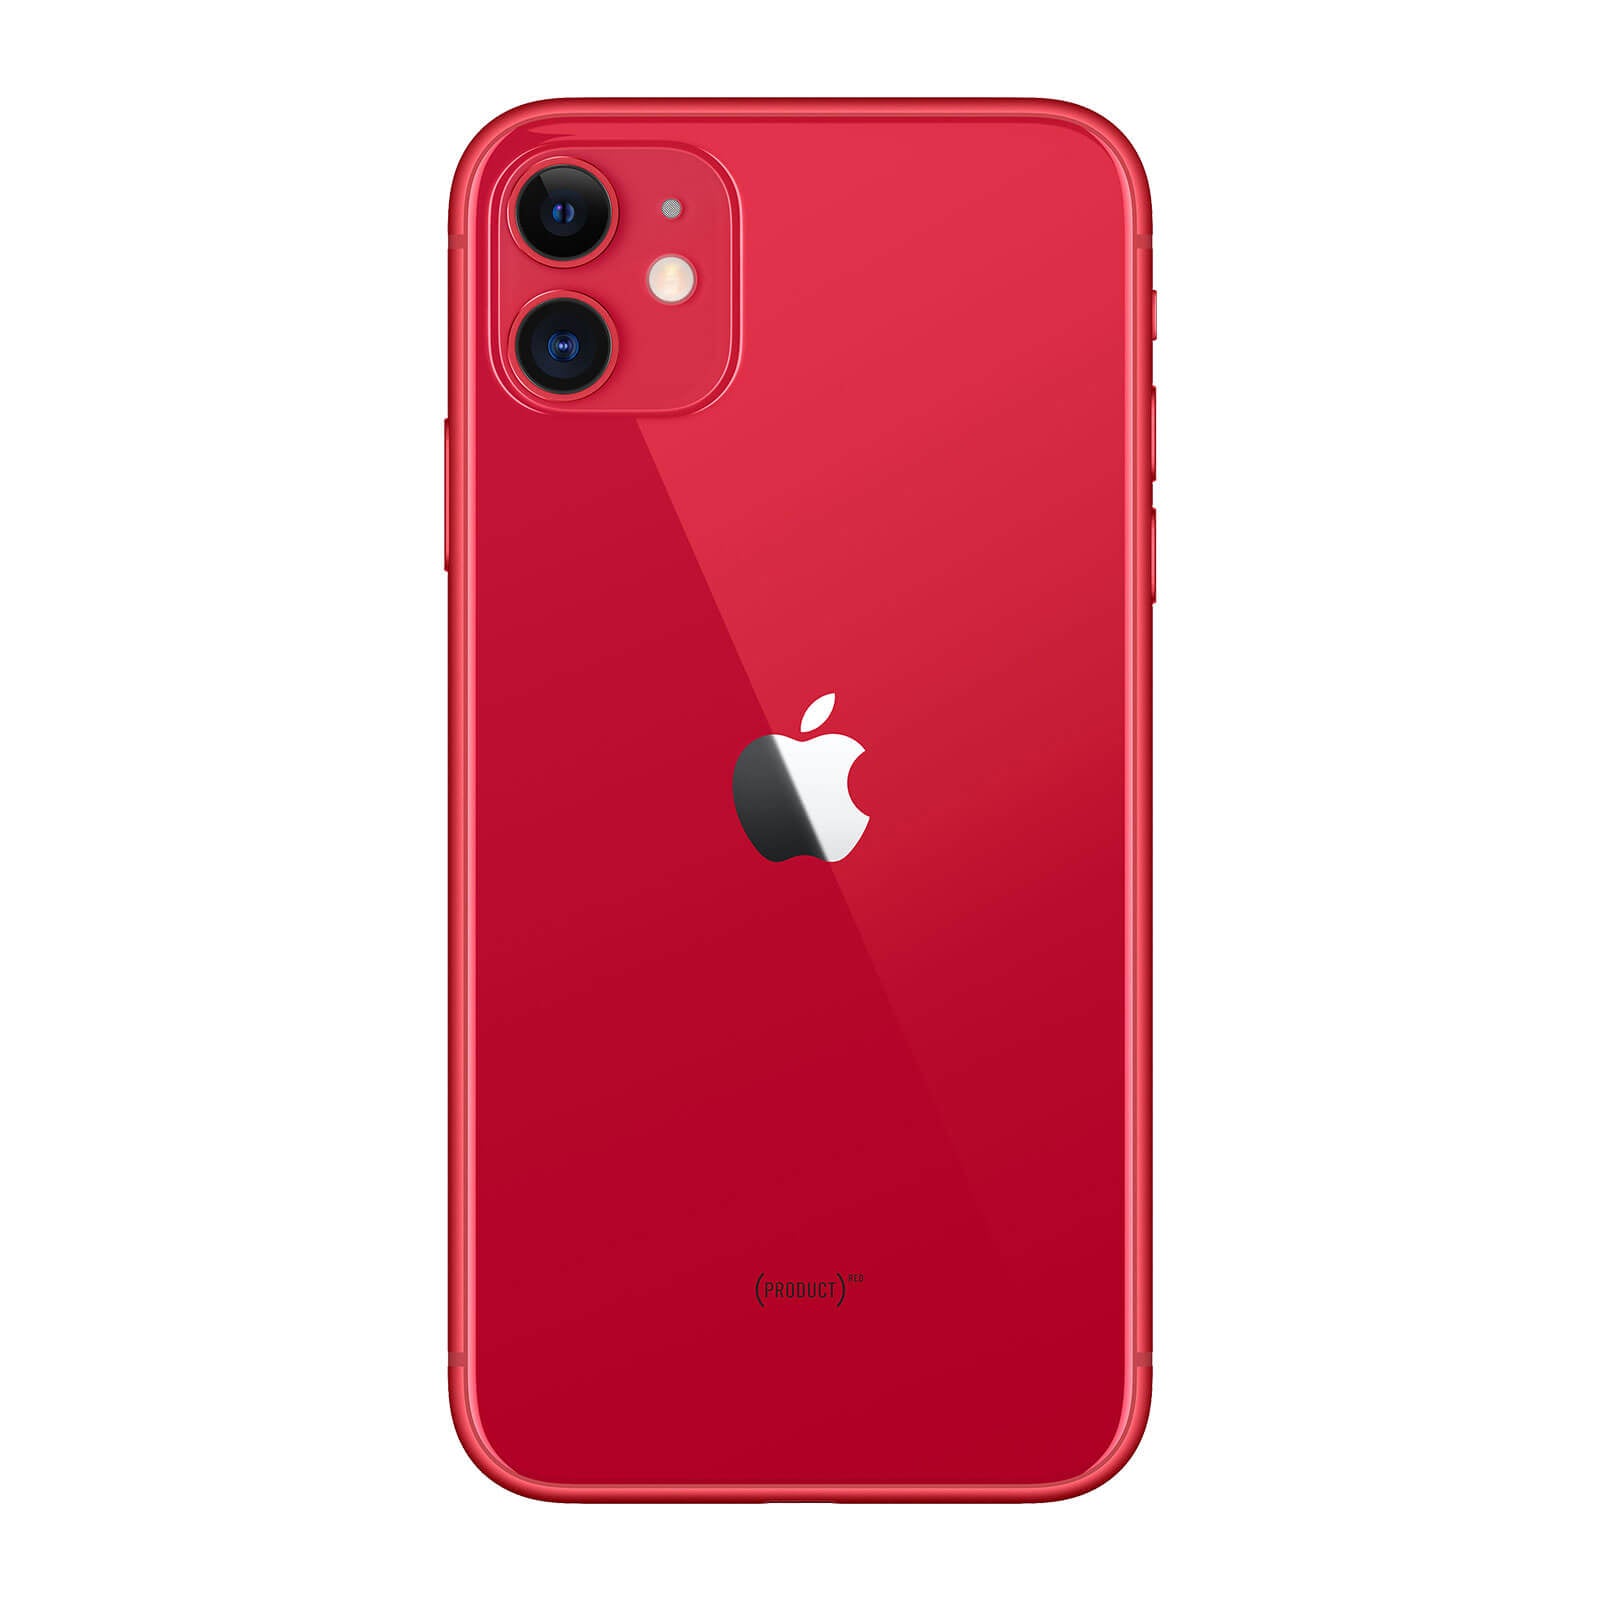 Apple iPhone 11 64GB Product Red Good Unlocked – Loop Mobile - US